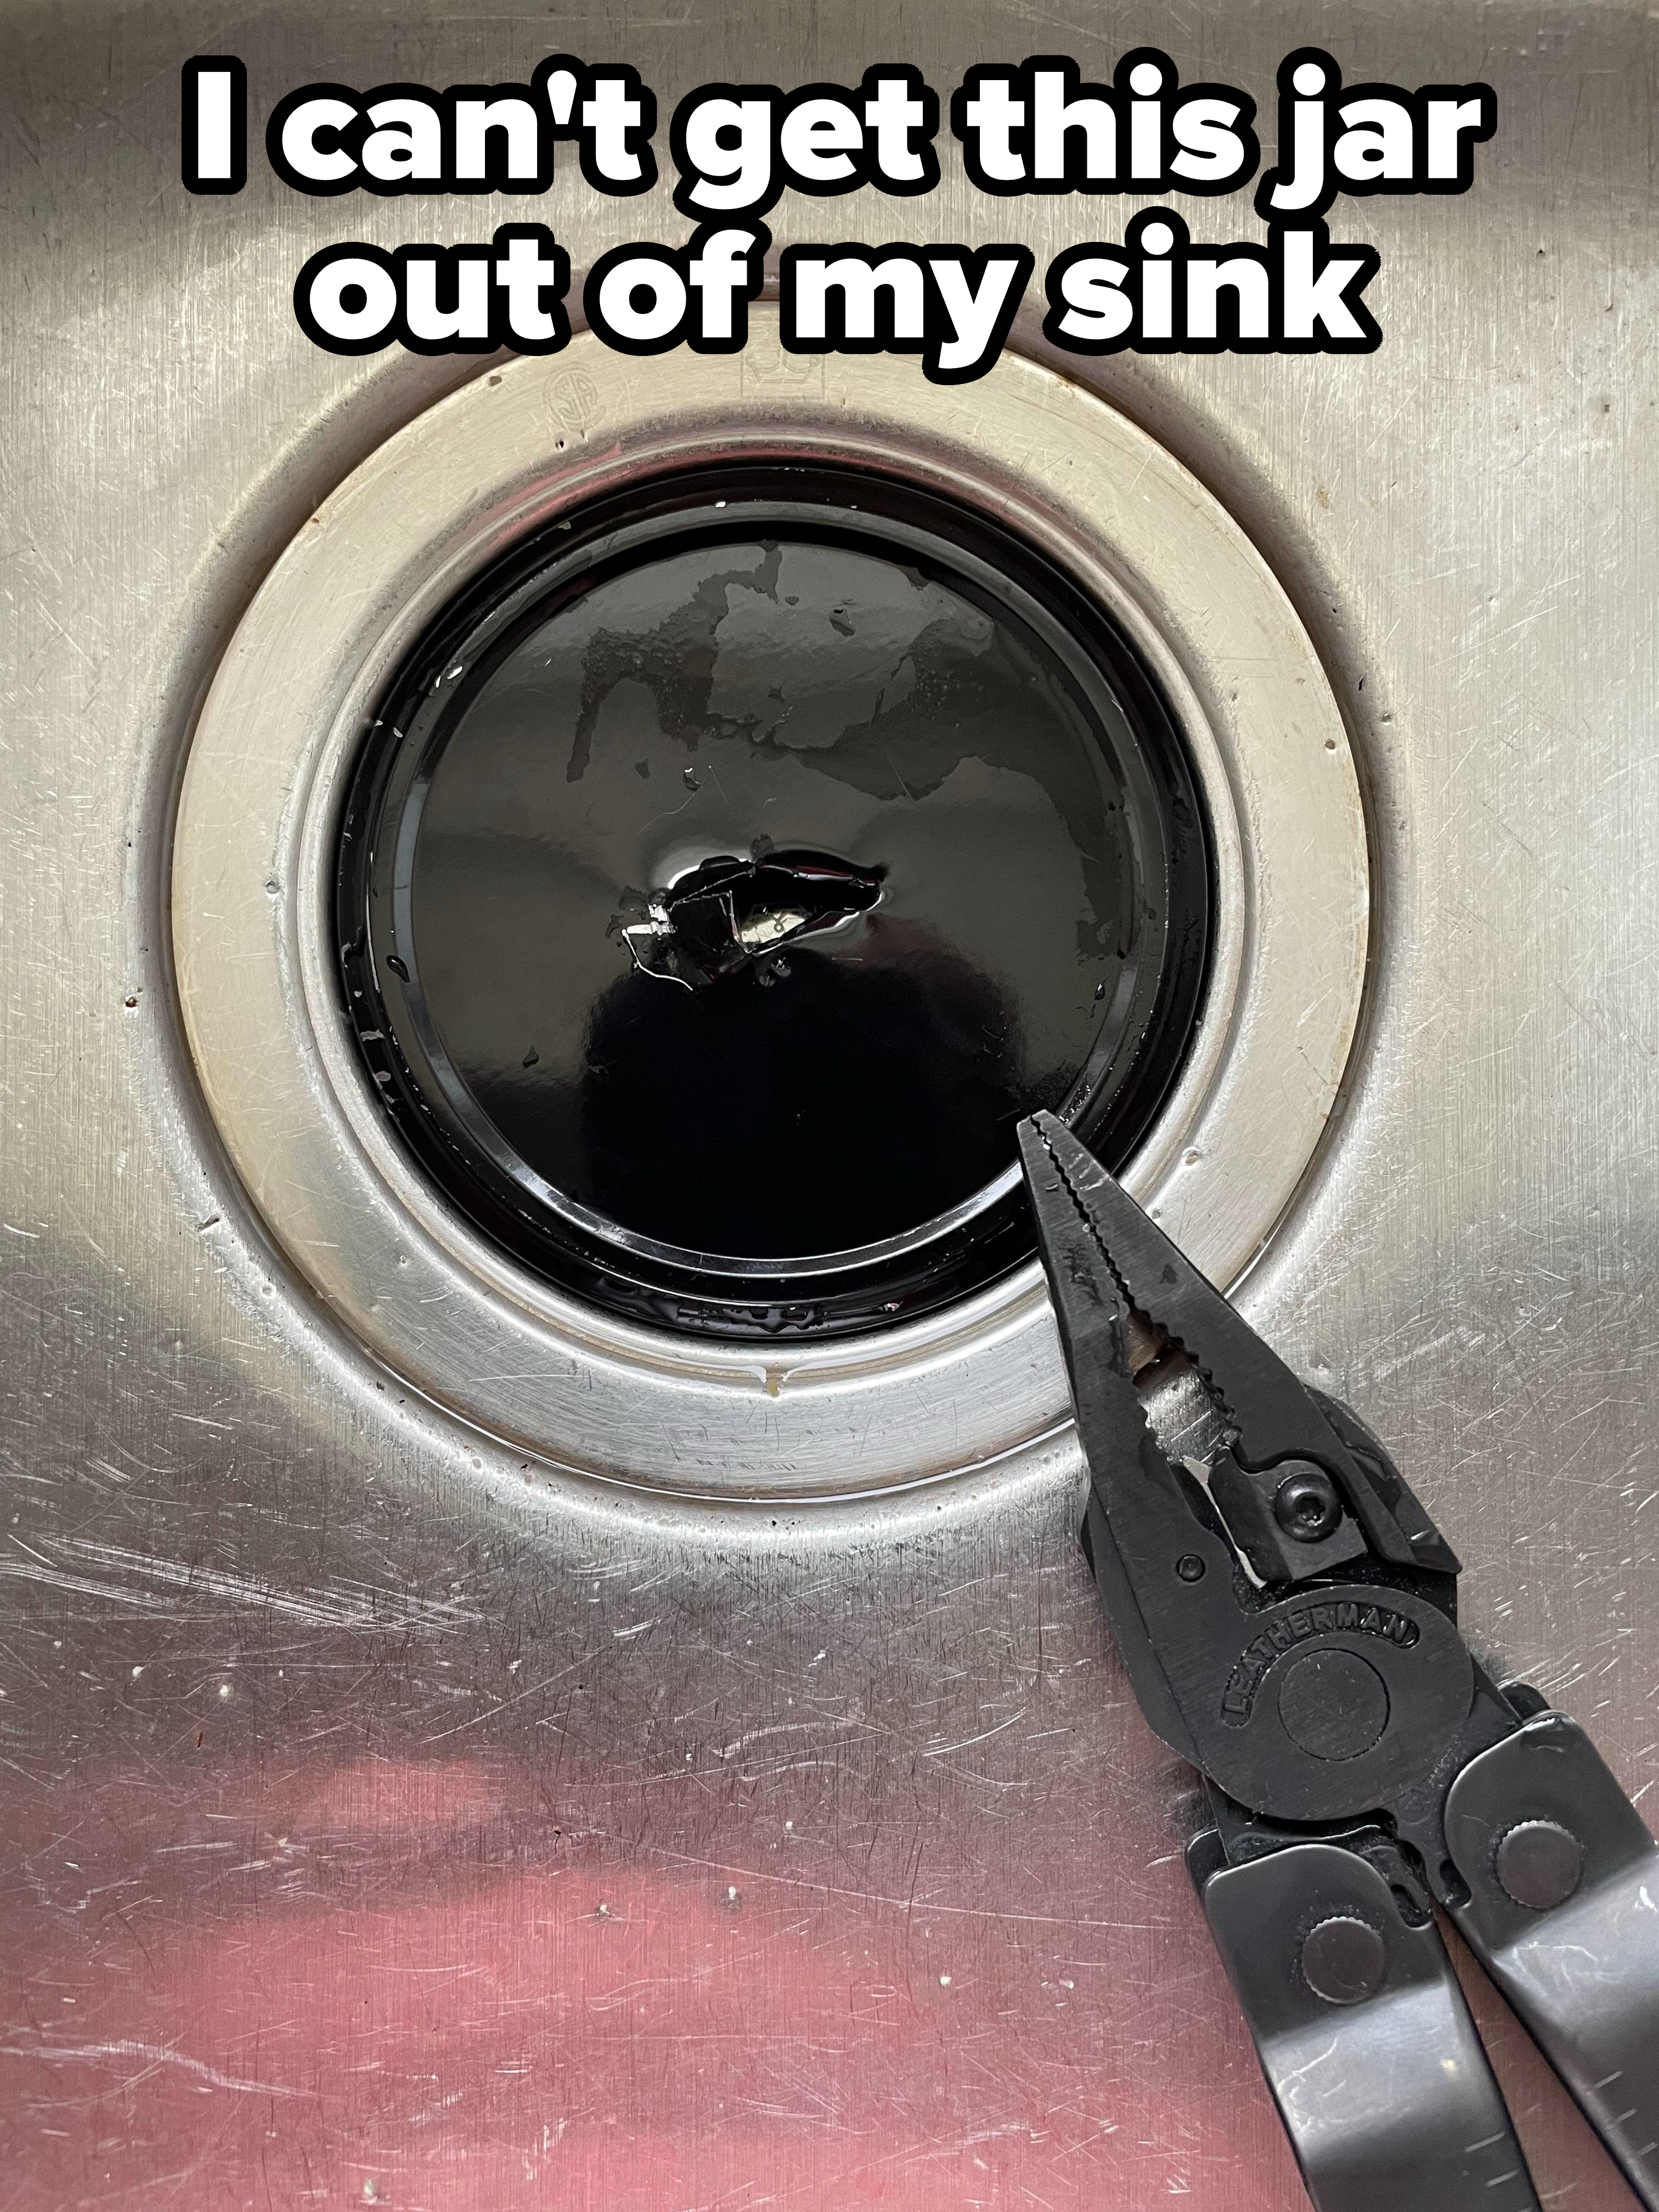 A jar stuck in a sink